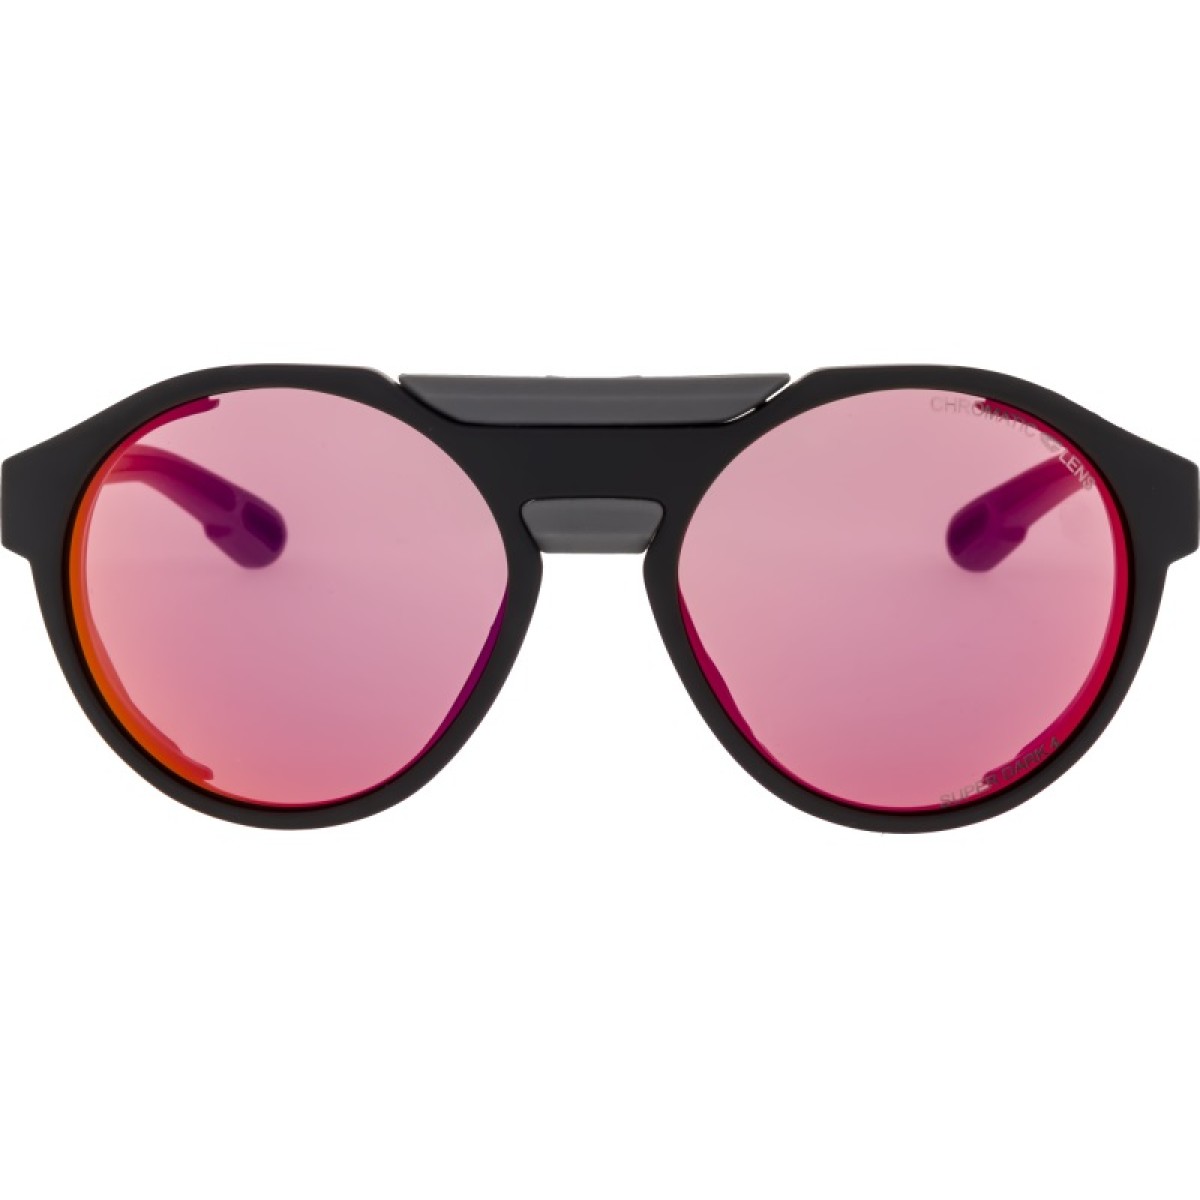 Photochromatic Sunglasses Manaslu E495-2 Black GOG - view 4